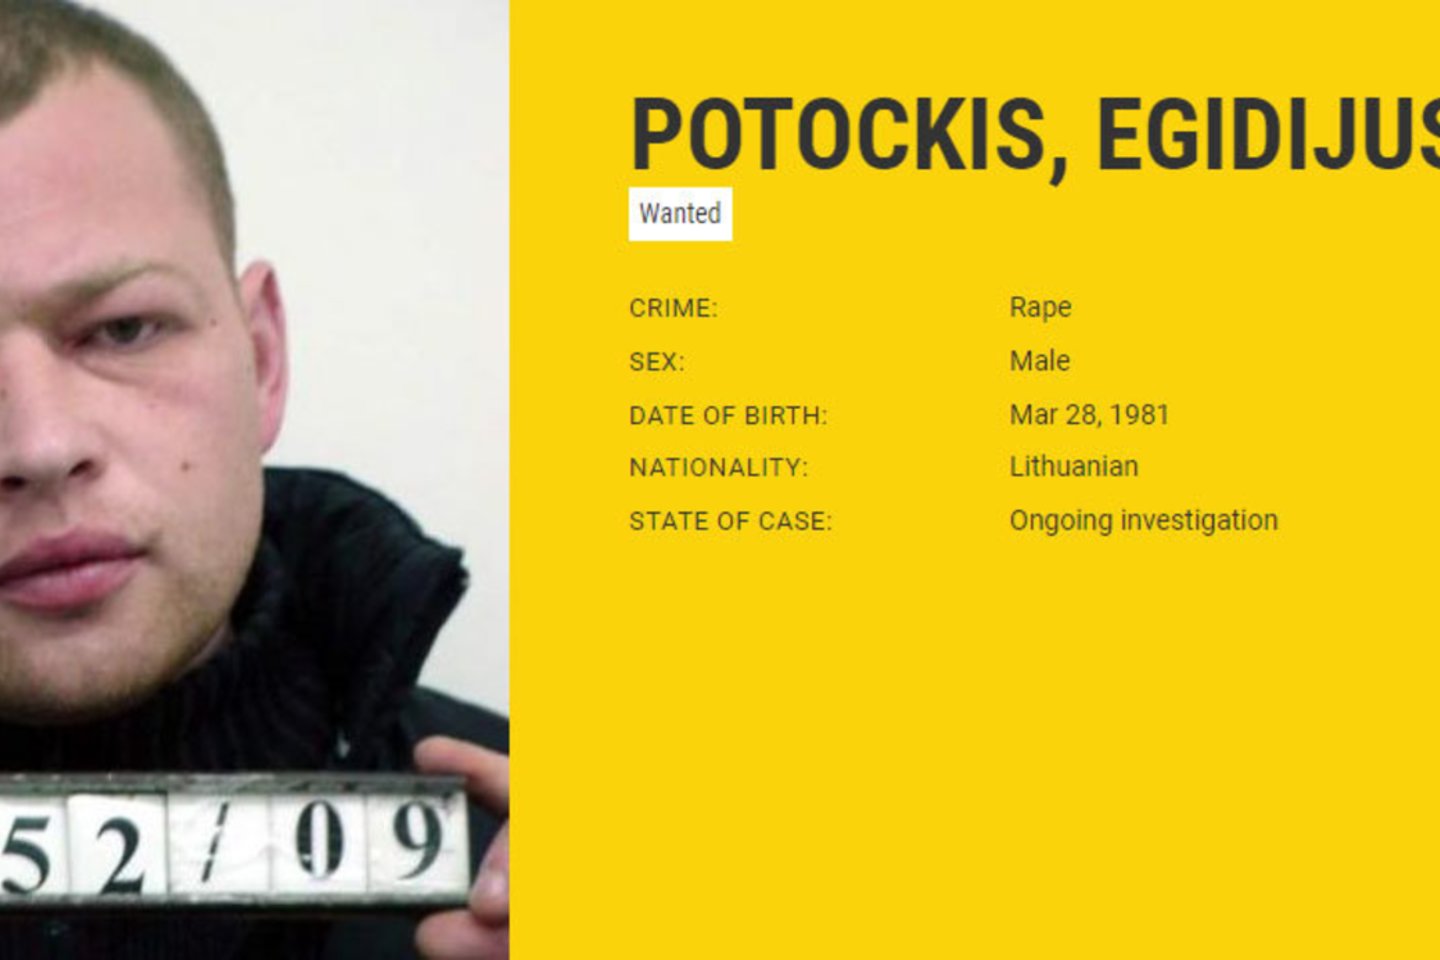  Egidijus Potockis.<br> eumostwanted.eu